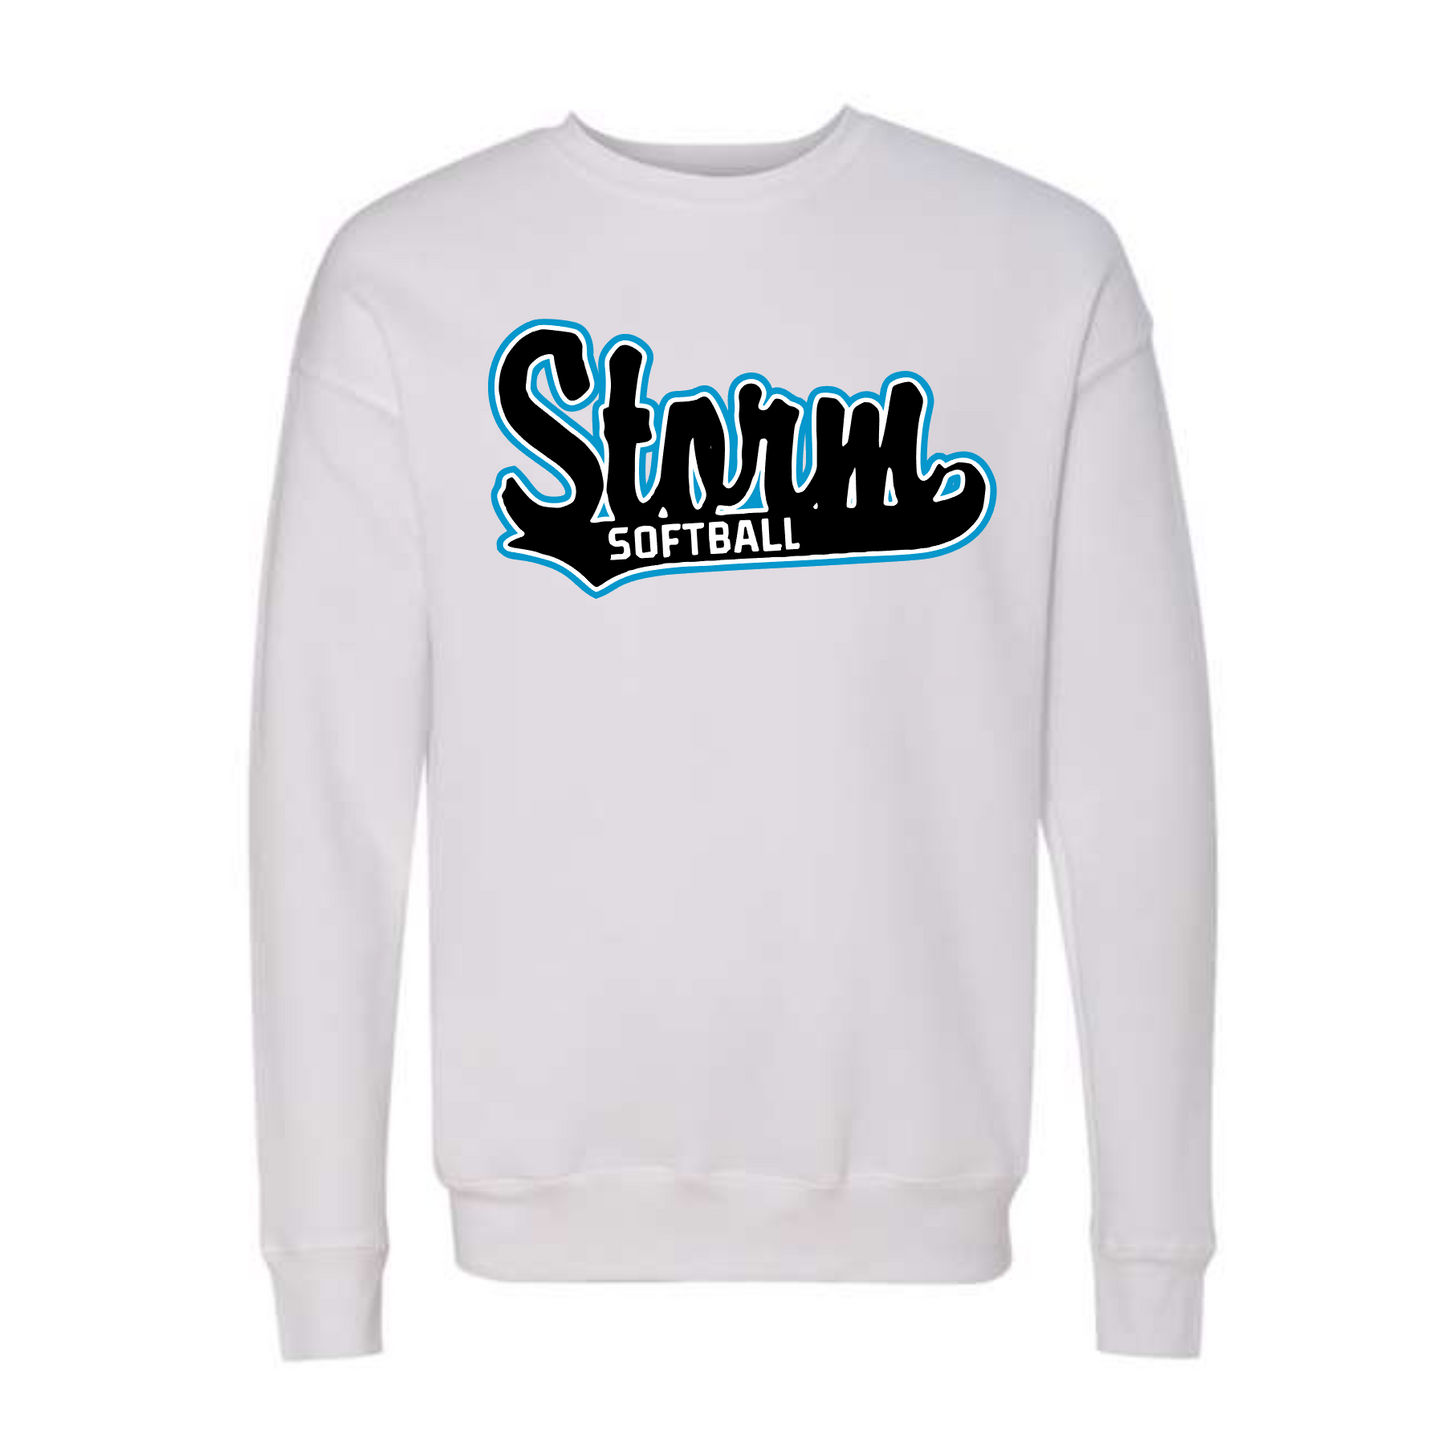 Storm Softball Sweatshirt, Black Storm Sweatshirt, Storm Softball Top